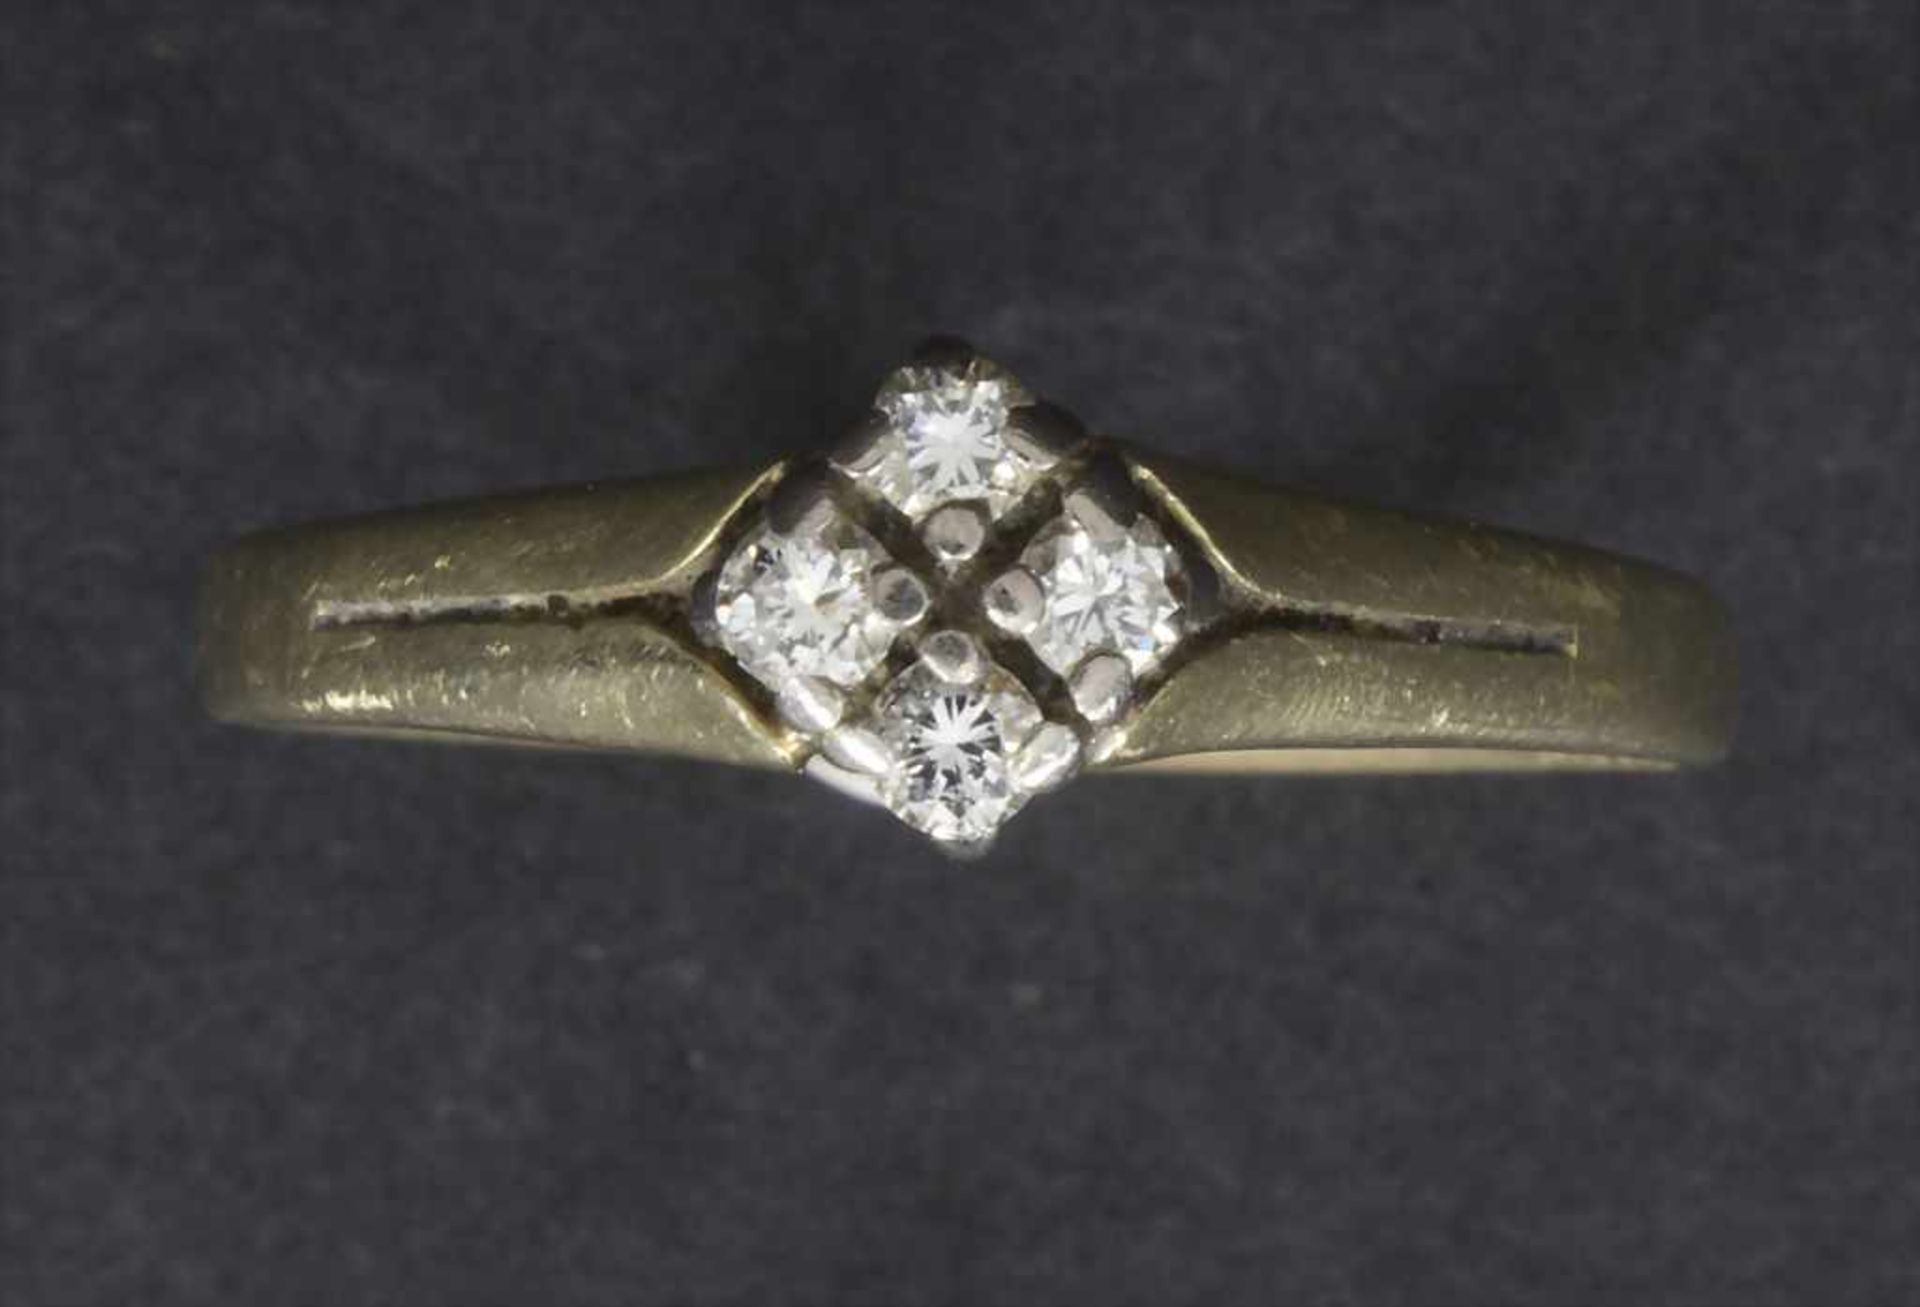 Damenring / A ladies ringMaterial: Gelbgold 585/000 18 Kt, 4 kl Diamanten,Ringgröße: 60, Diamant